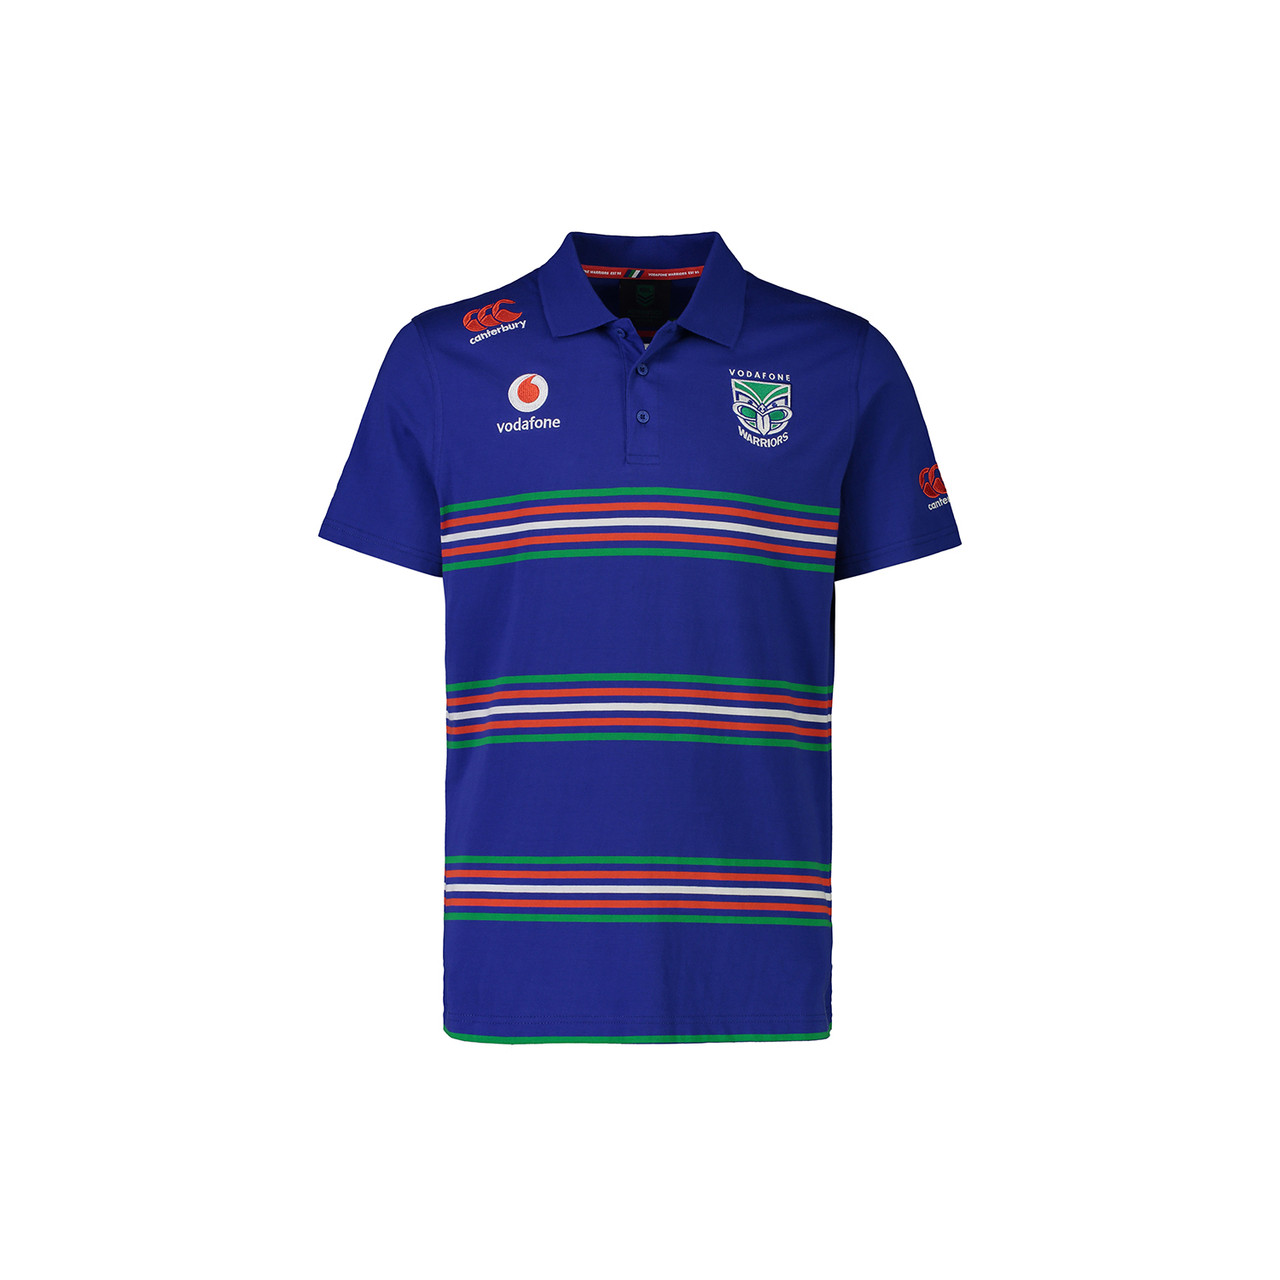 New England Rugby Men's Polo Shirt Iconic Yarn Dye Polo Shirt 